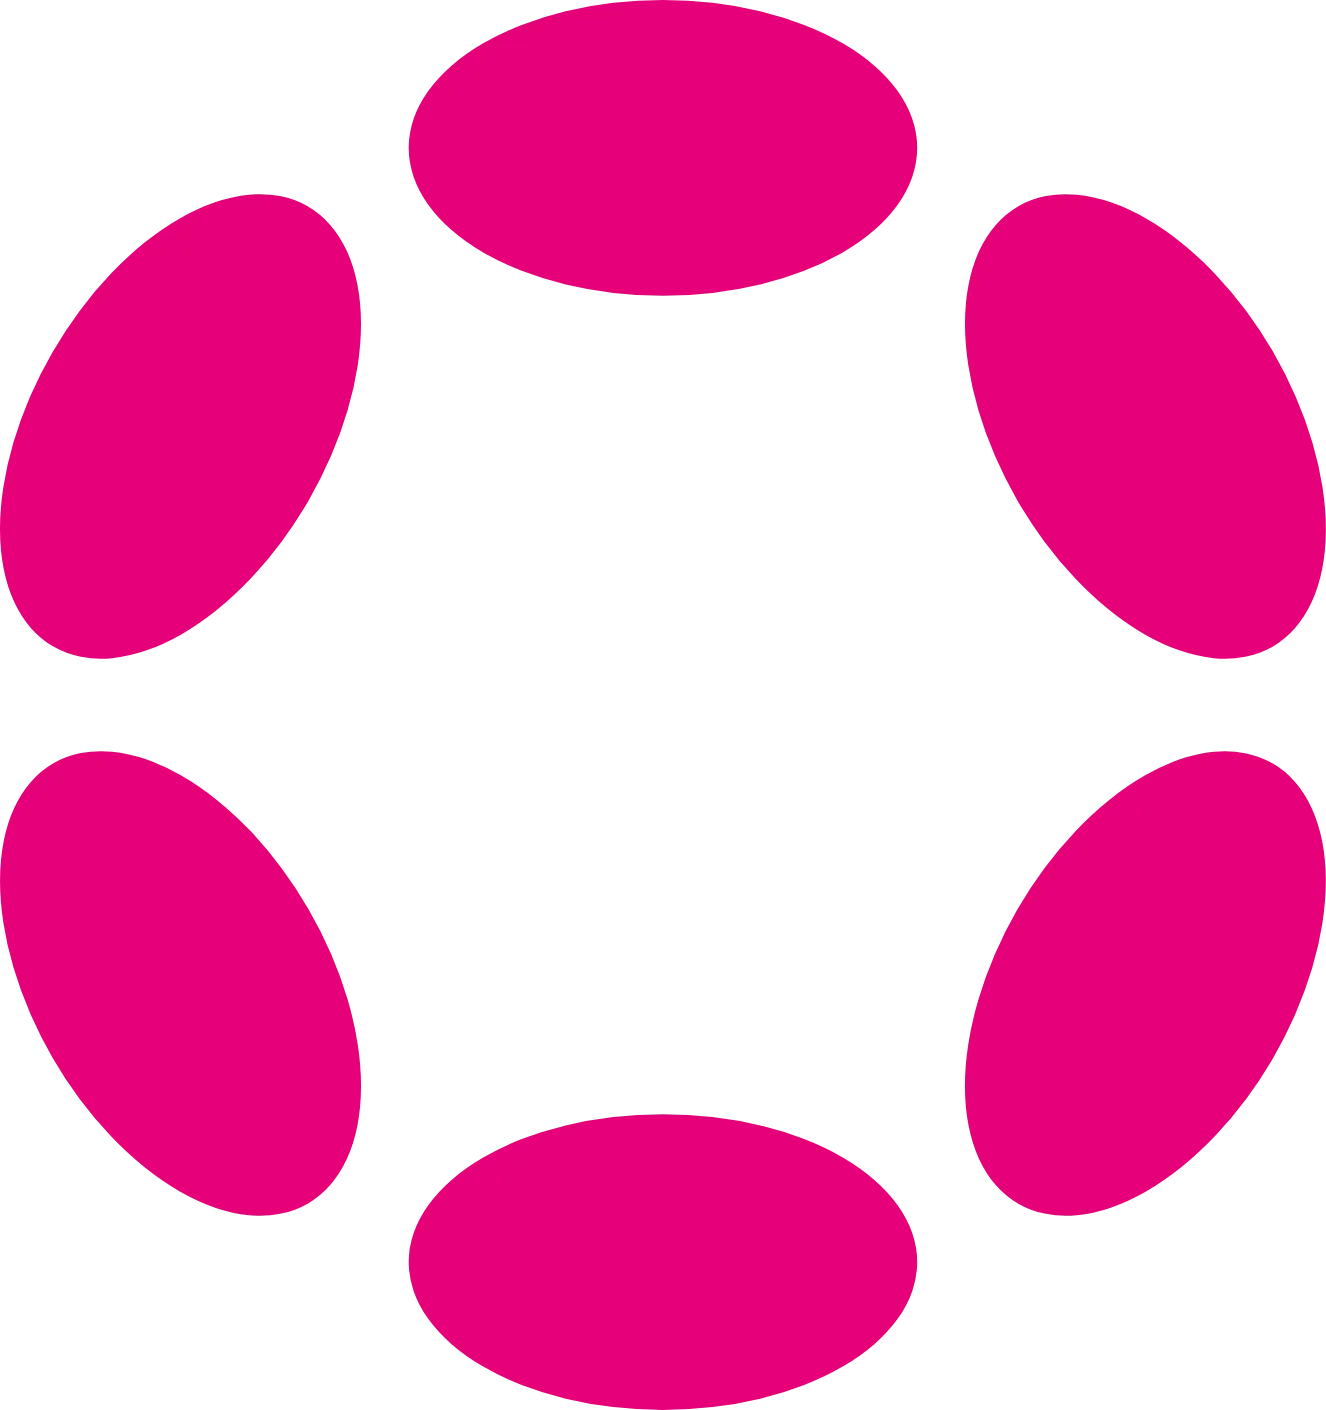 Polkadot logo in svg format